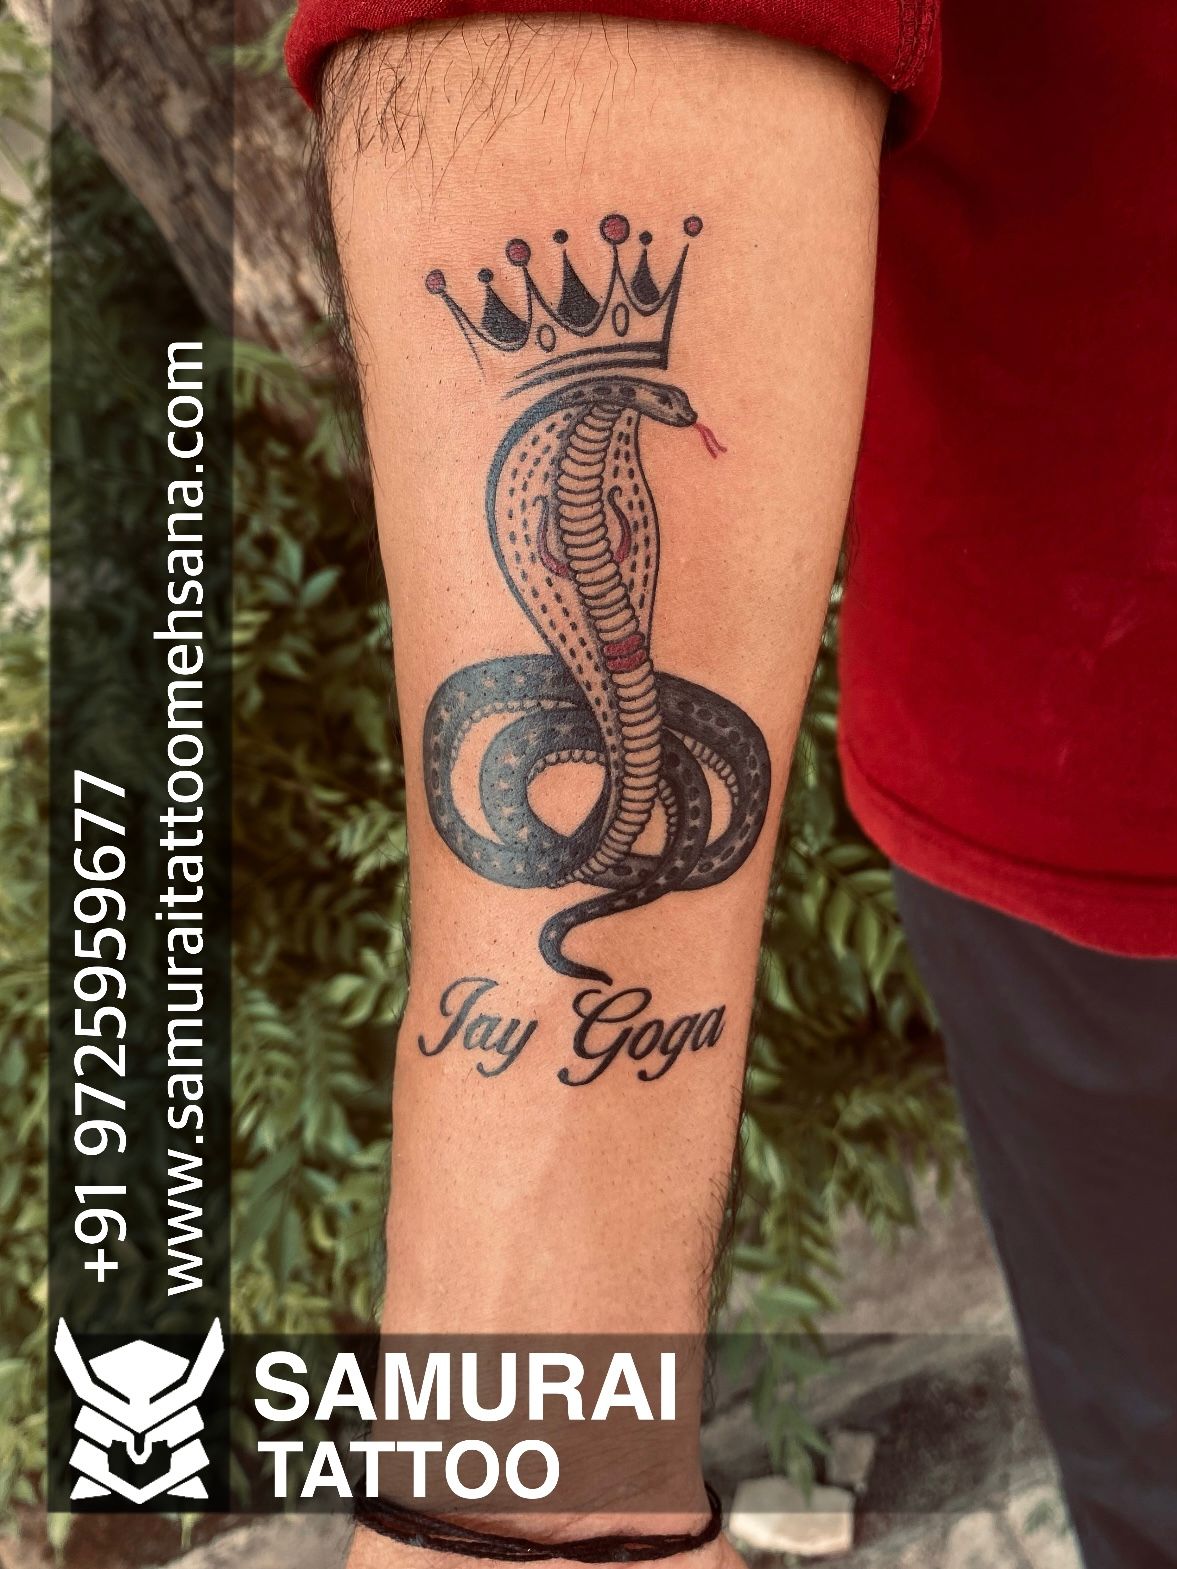 Tattoo uploaded by Samurai Tattoo mehsana  Goga Maharaj tattoo Goga tattoo  Goga maharaj nu tattoo Jay goga tattoo  Tattoodo